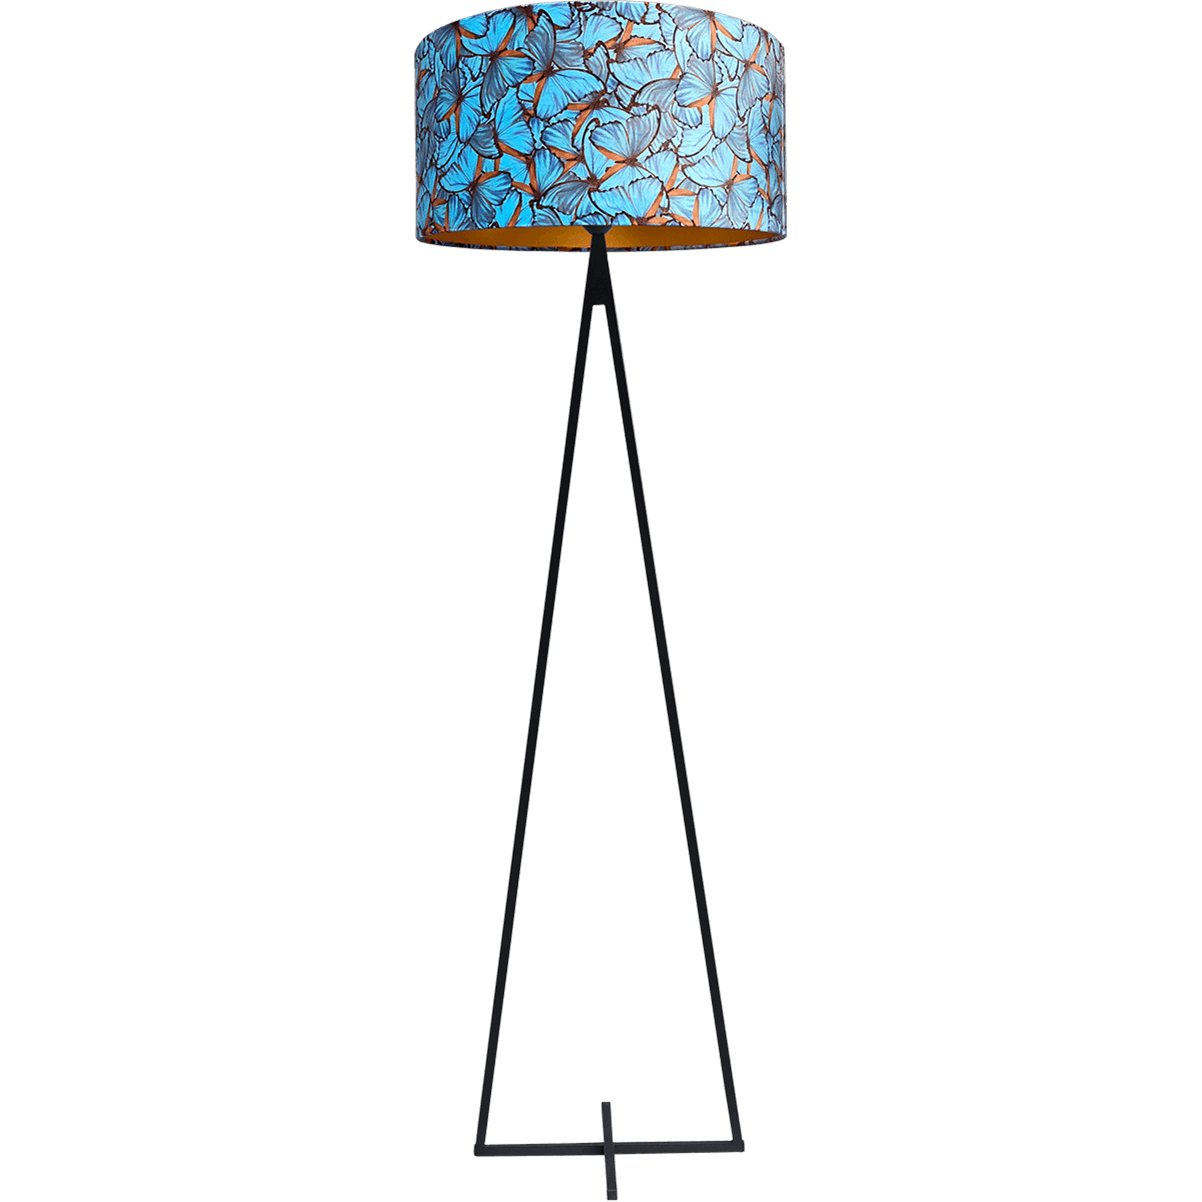 Vloerlamp Cross Triangle zwart structuur hoogte 158cm inclusief lampenkap met butterflymotief Artik butterfly 52/52/25 - MASTERLIGHT